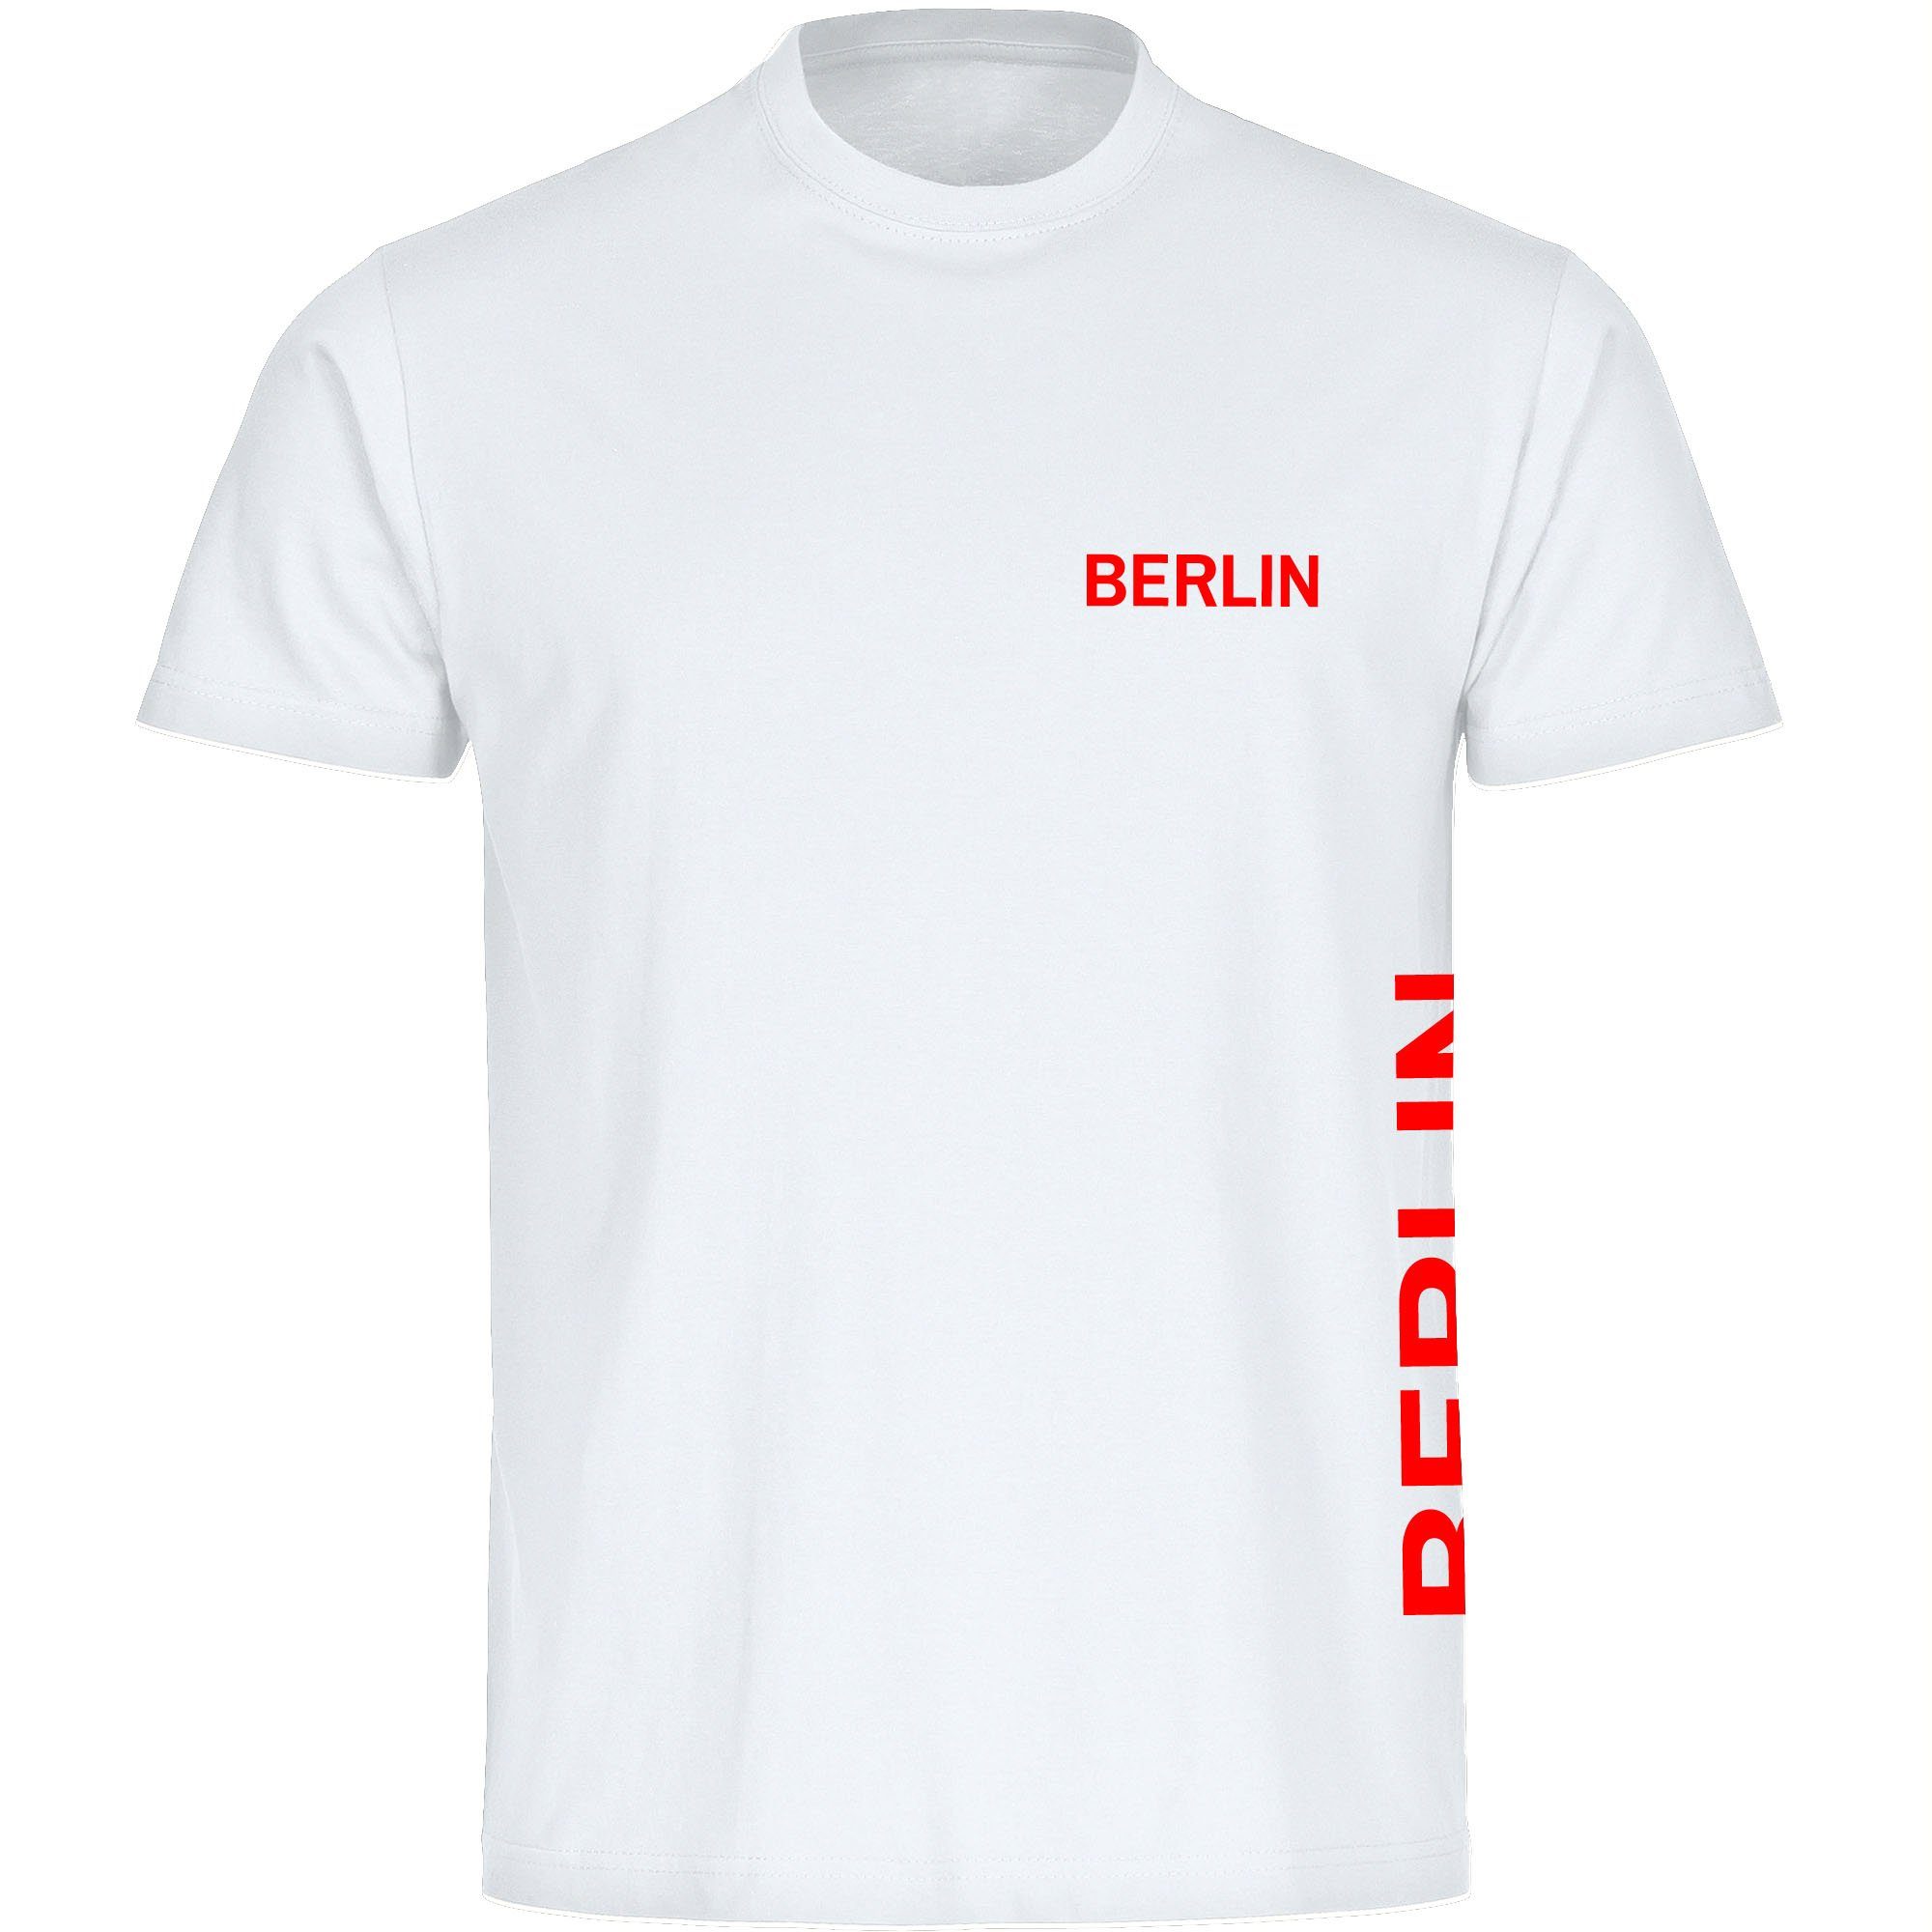 multifanshop T-Shirt Kinder Berlin rot - Brust & Seite - Boy Girl